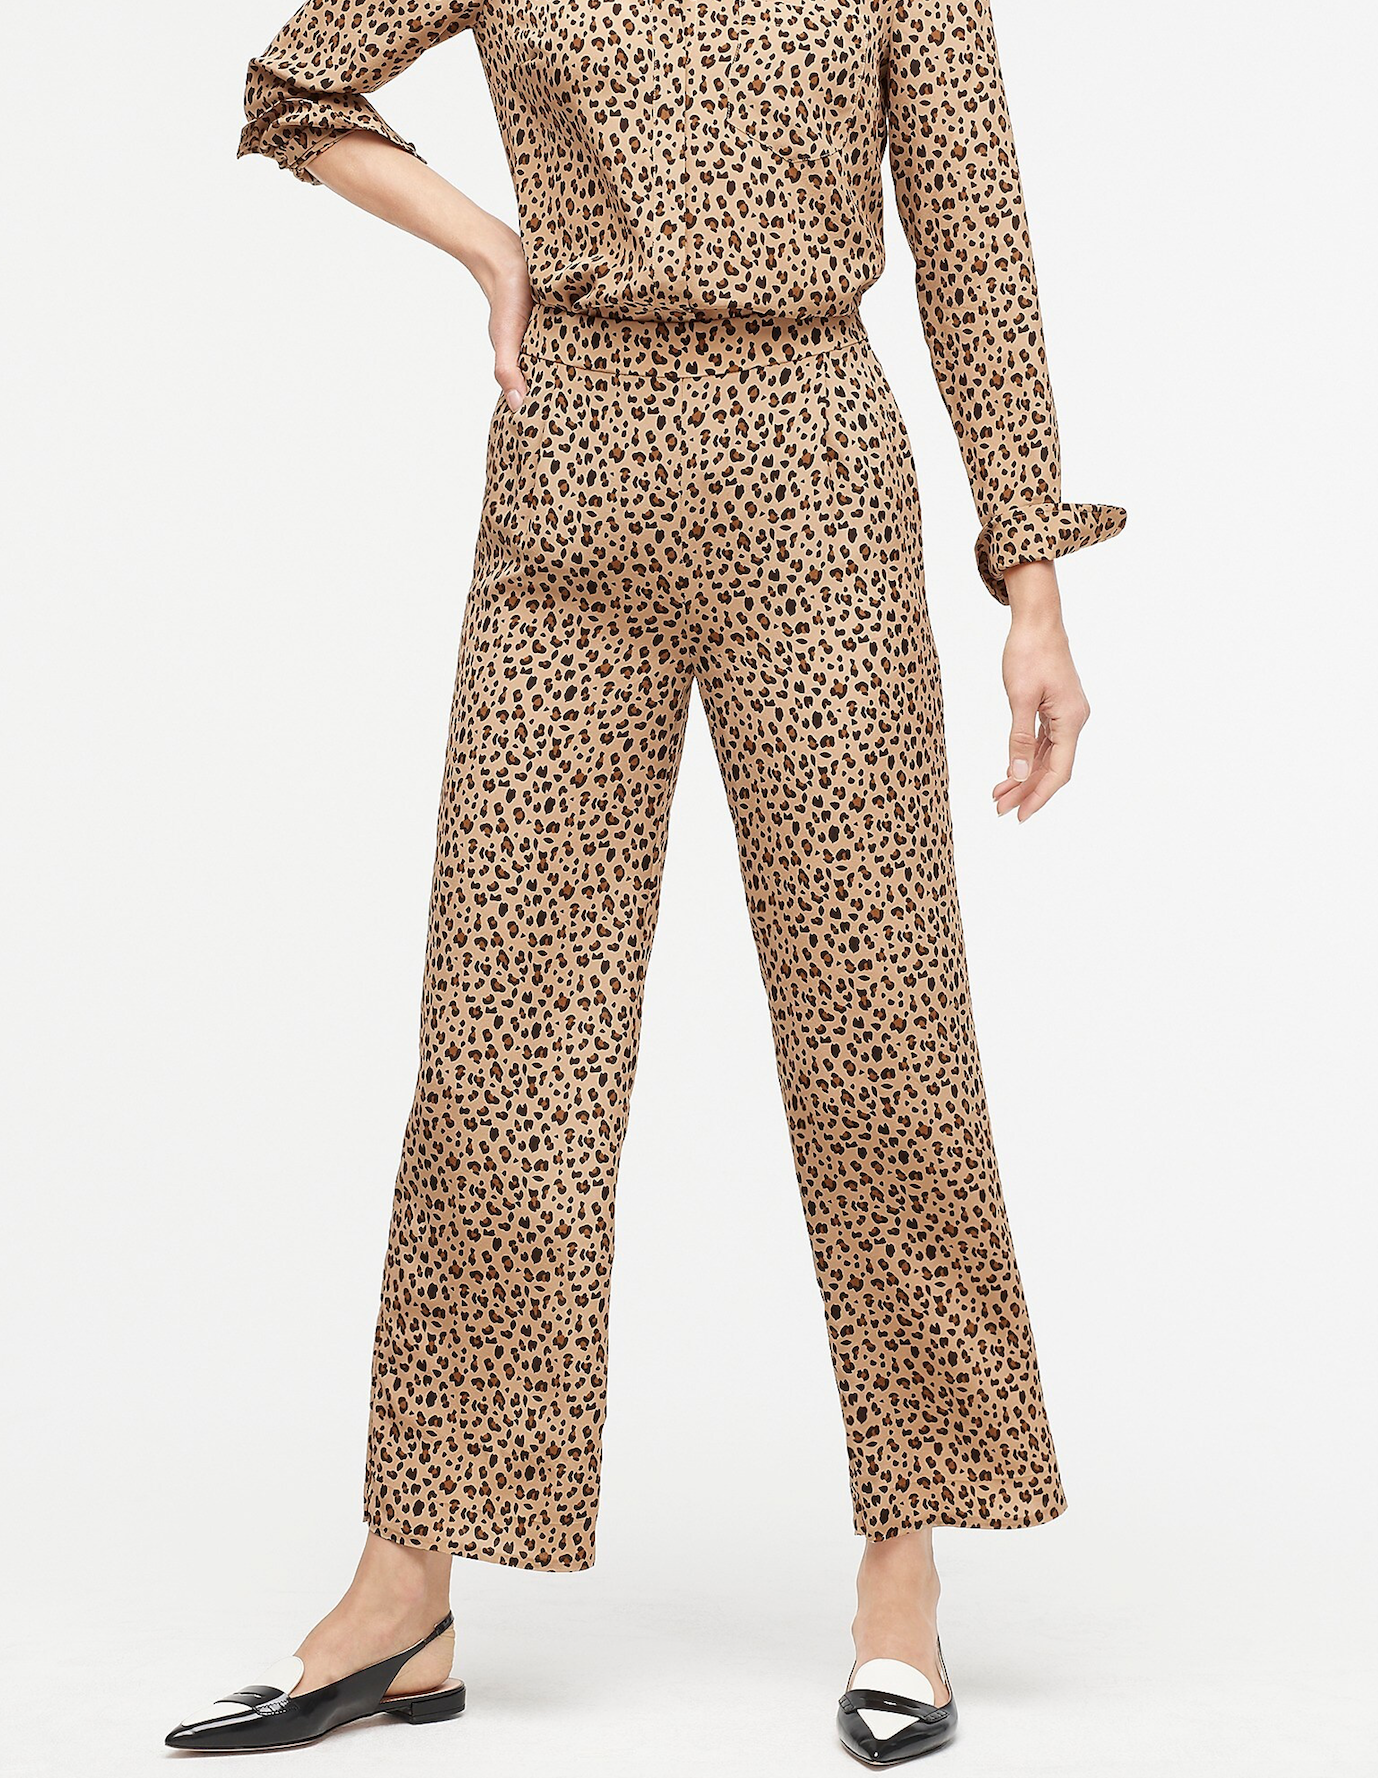 Leopard Print Cropped Pant